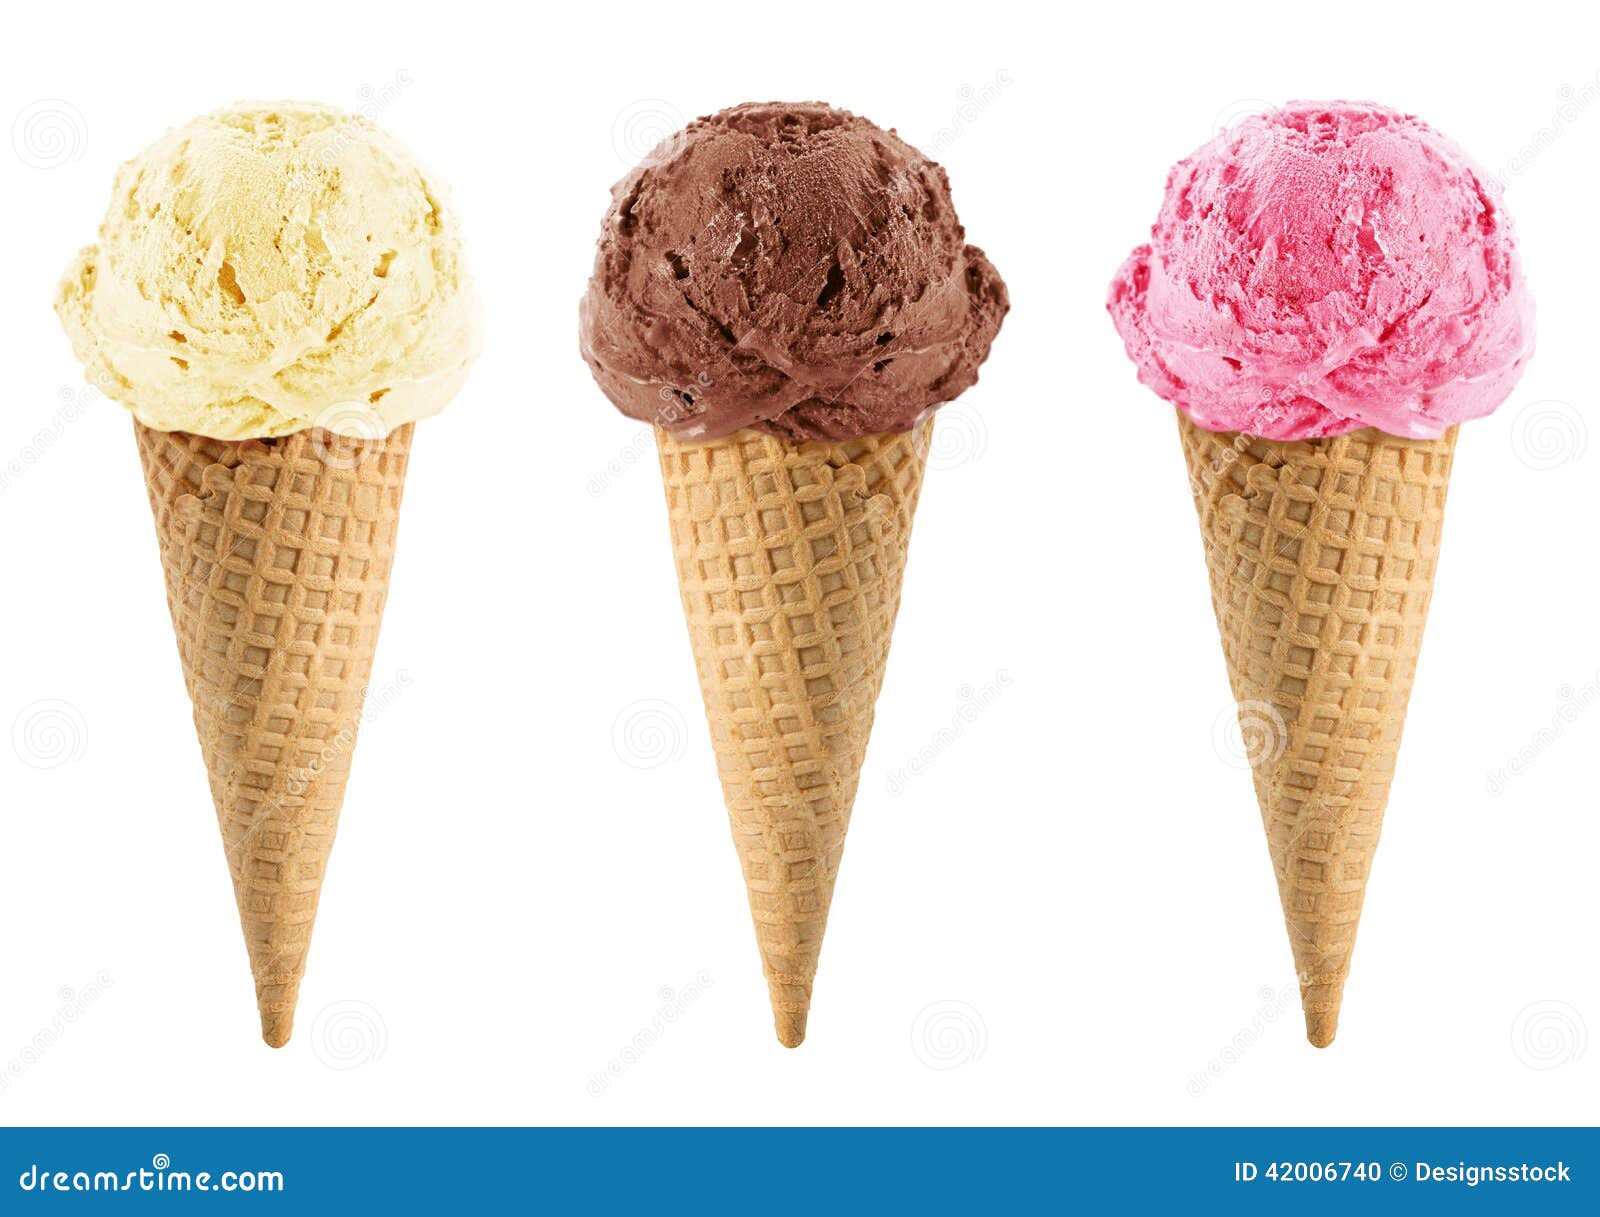 Discover 72+ ice cream scoop wallpaper best - xkldase.edu.vn